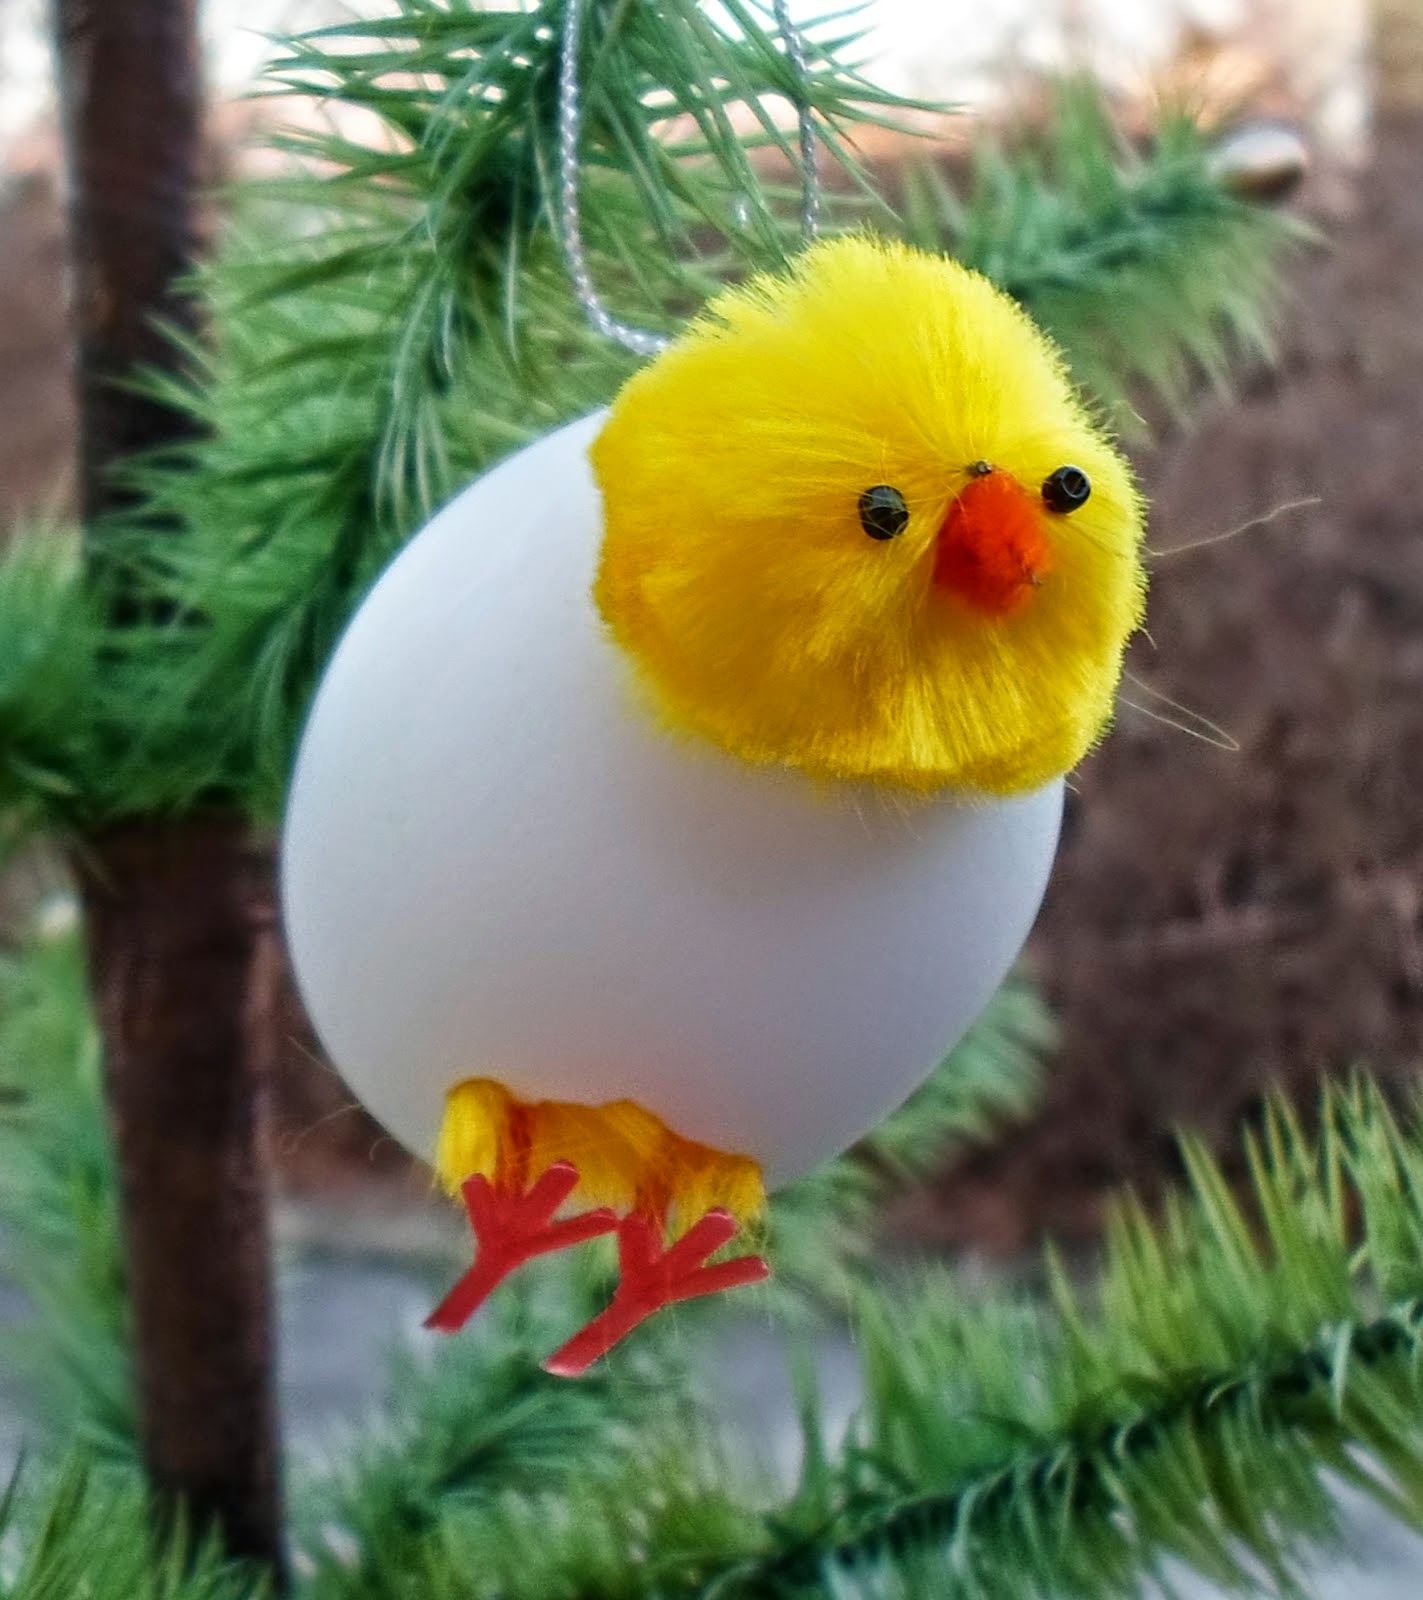 http://happierthanapiginmud.blogspot.com/2015/04/hatching-chick-ornament-or-decoration.html